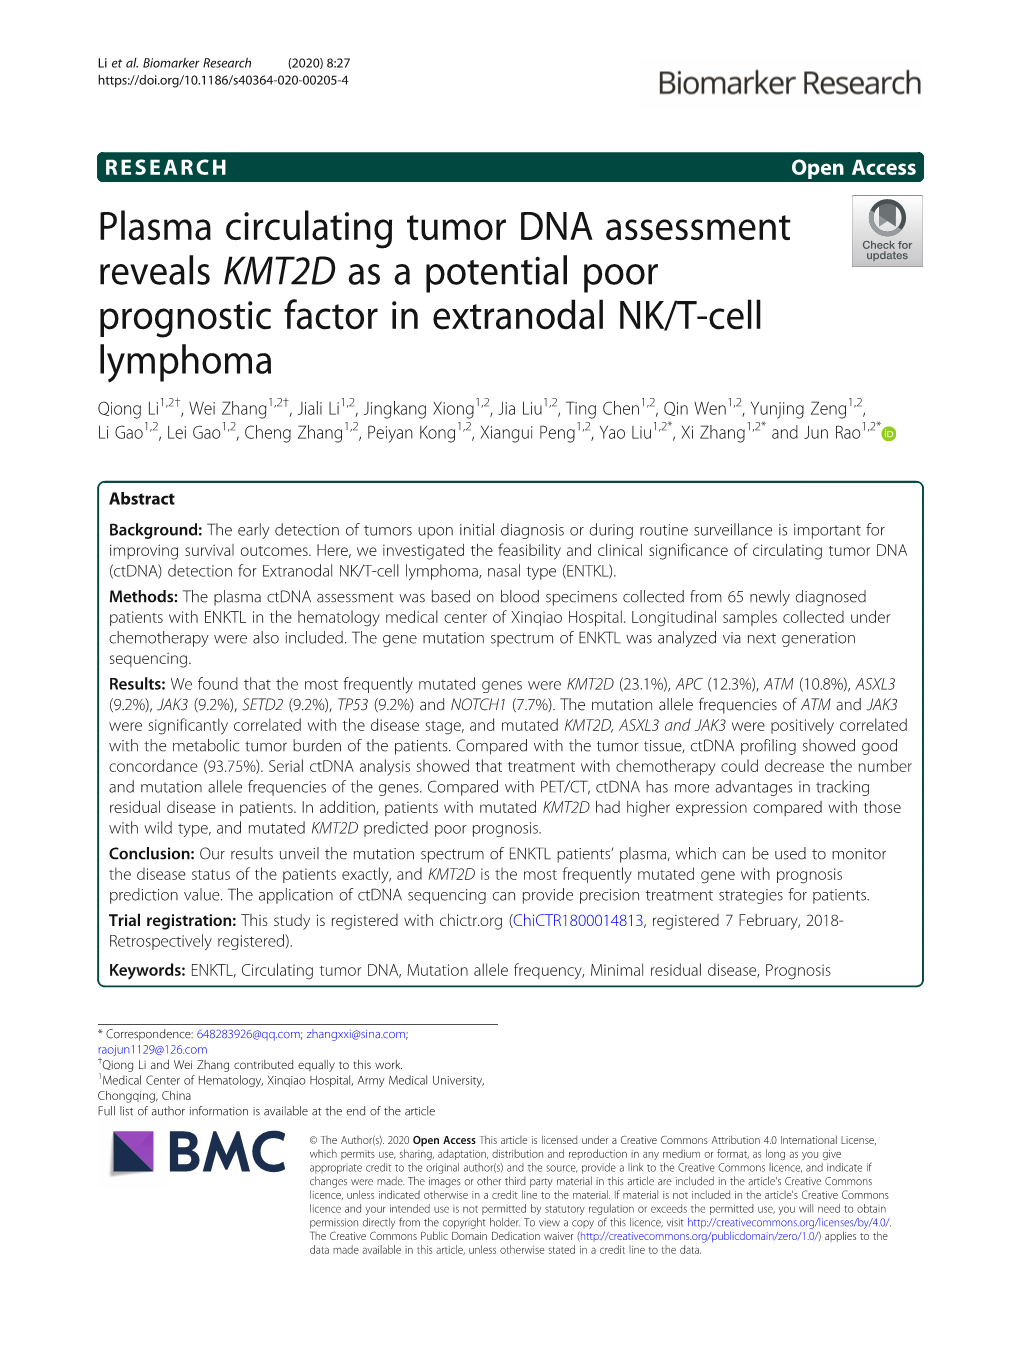 Plasma Circulating Tumor DNA Assessment Reveals KMT2D As A